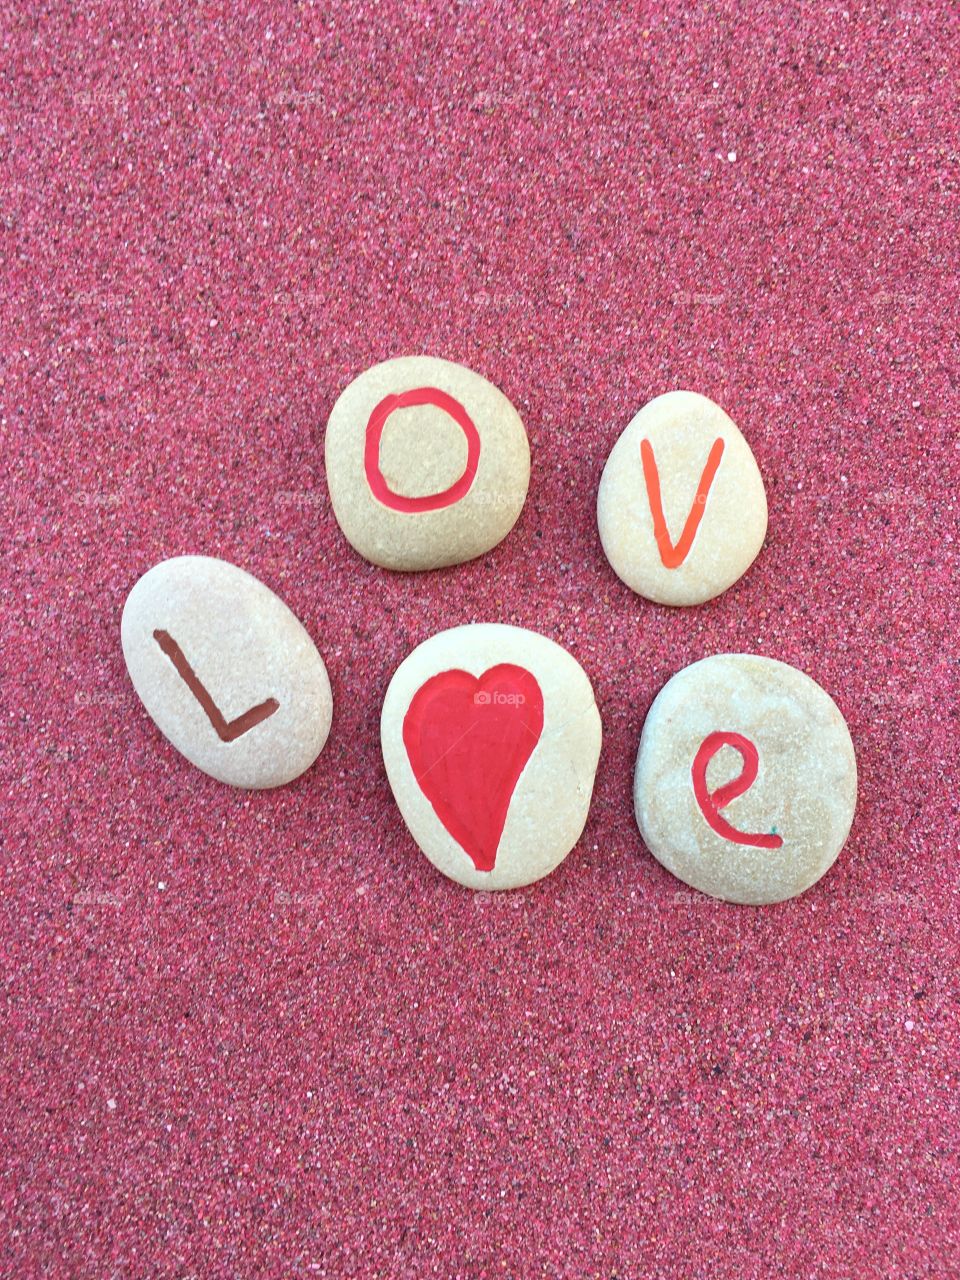 Love message on stones 